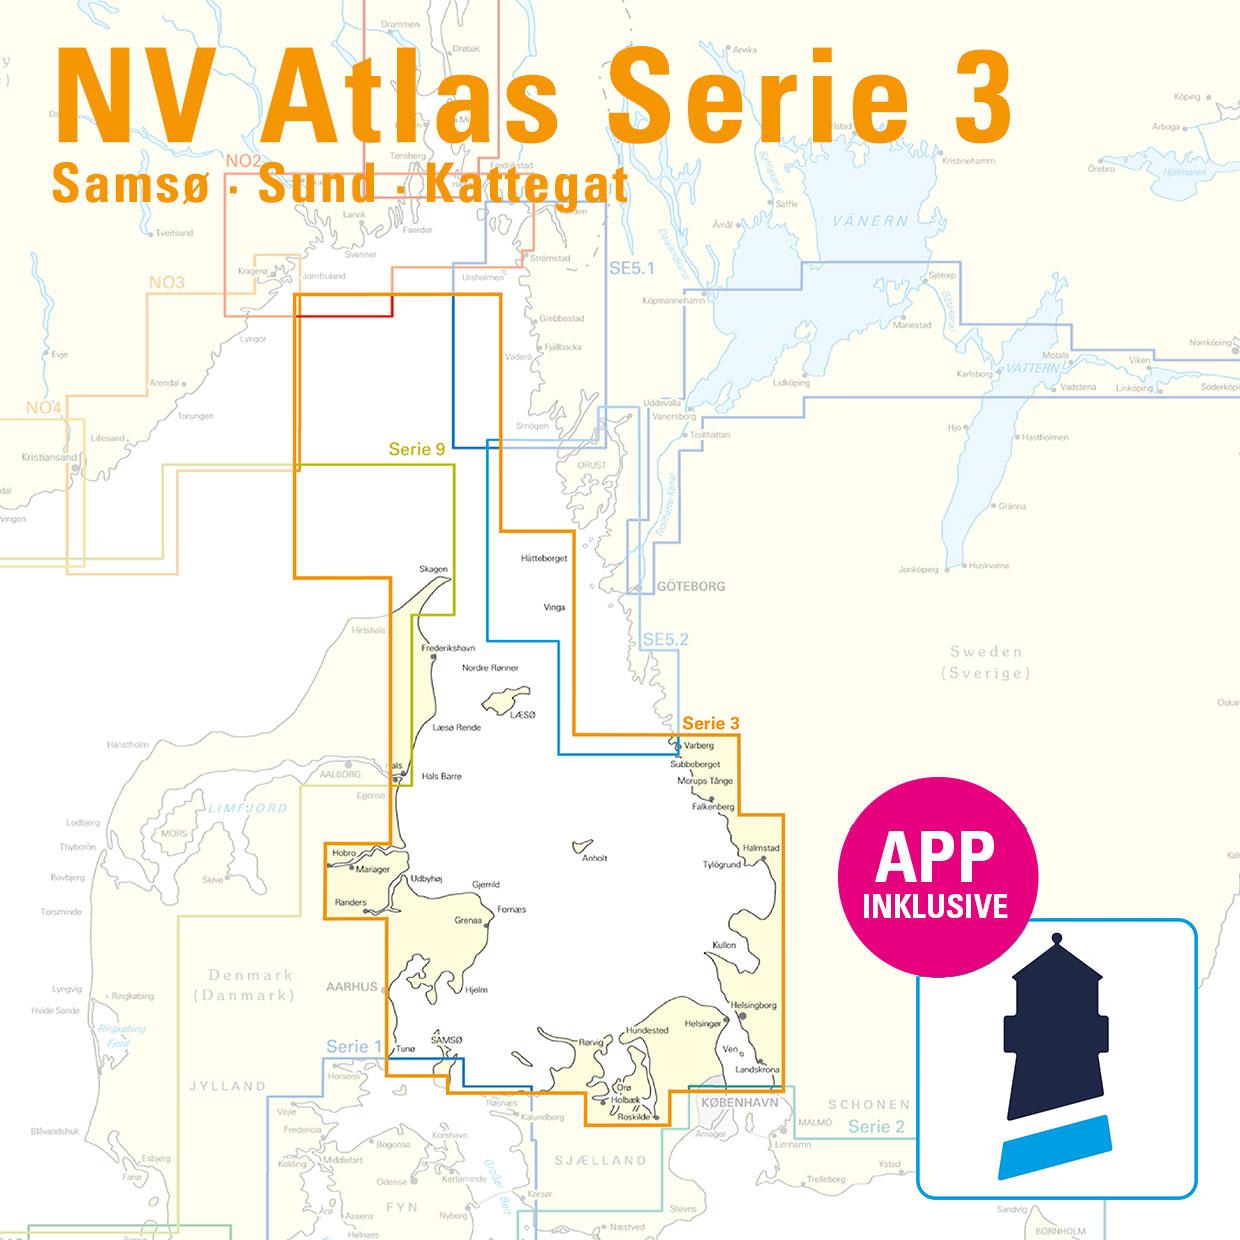 ABO - NV Charts Baltic Serie 3 Samsø-Sund-Kattegat